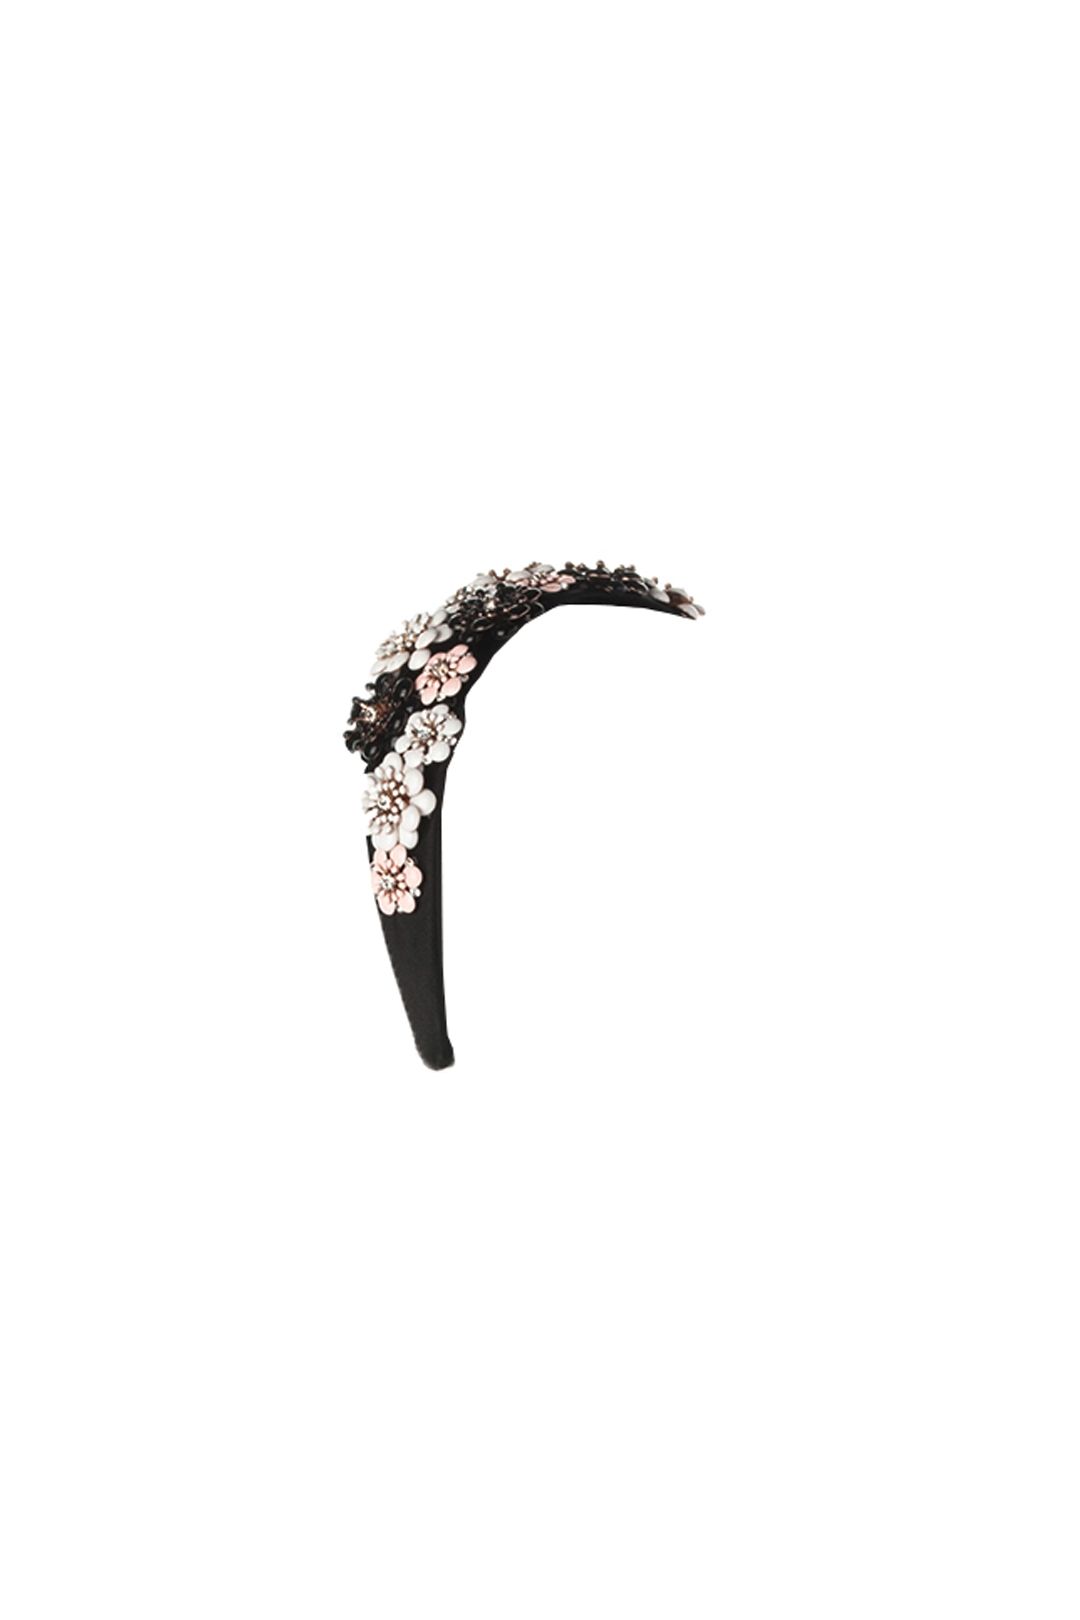 Olga Berg - Victoria Floral Headband - Black Floral - Side